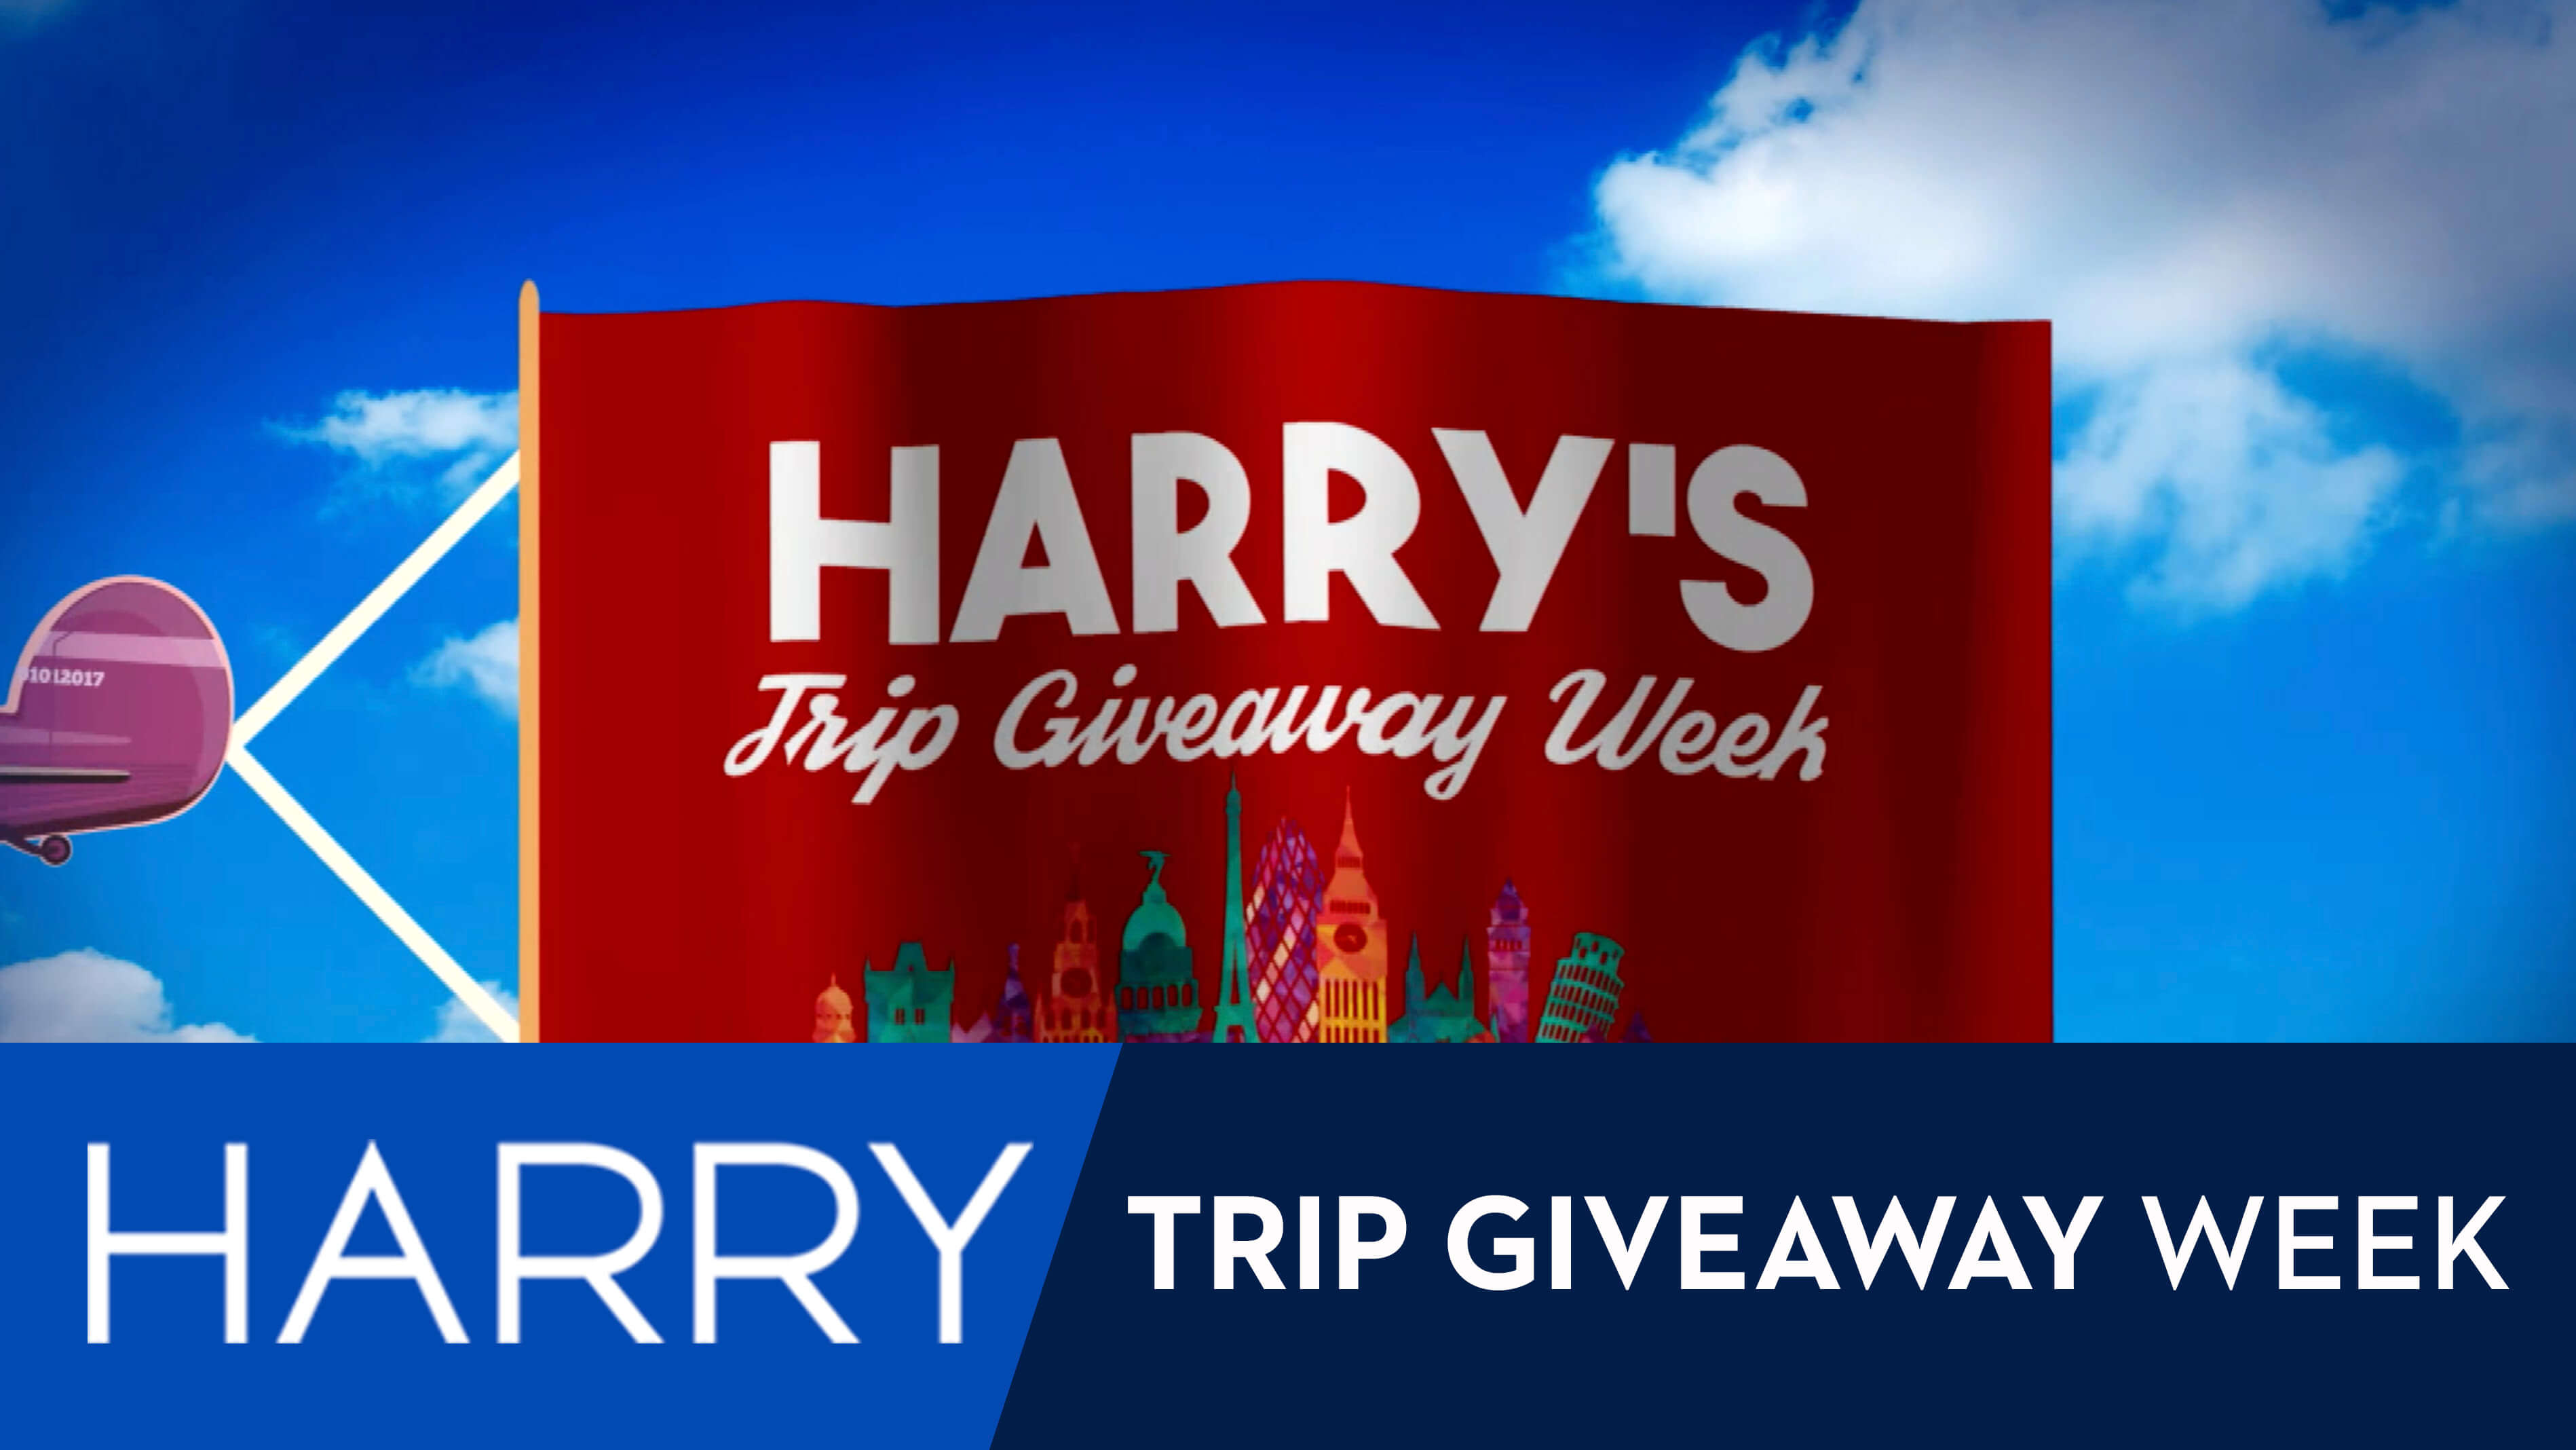 Harry's Trip Giveaway Week Sweepstakes